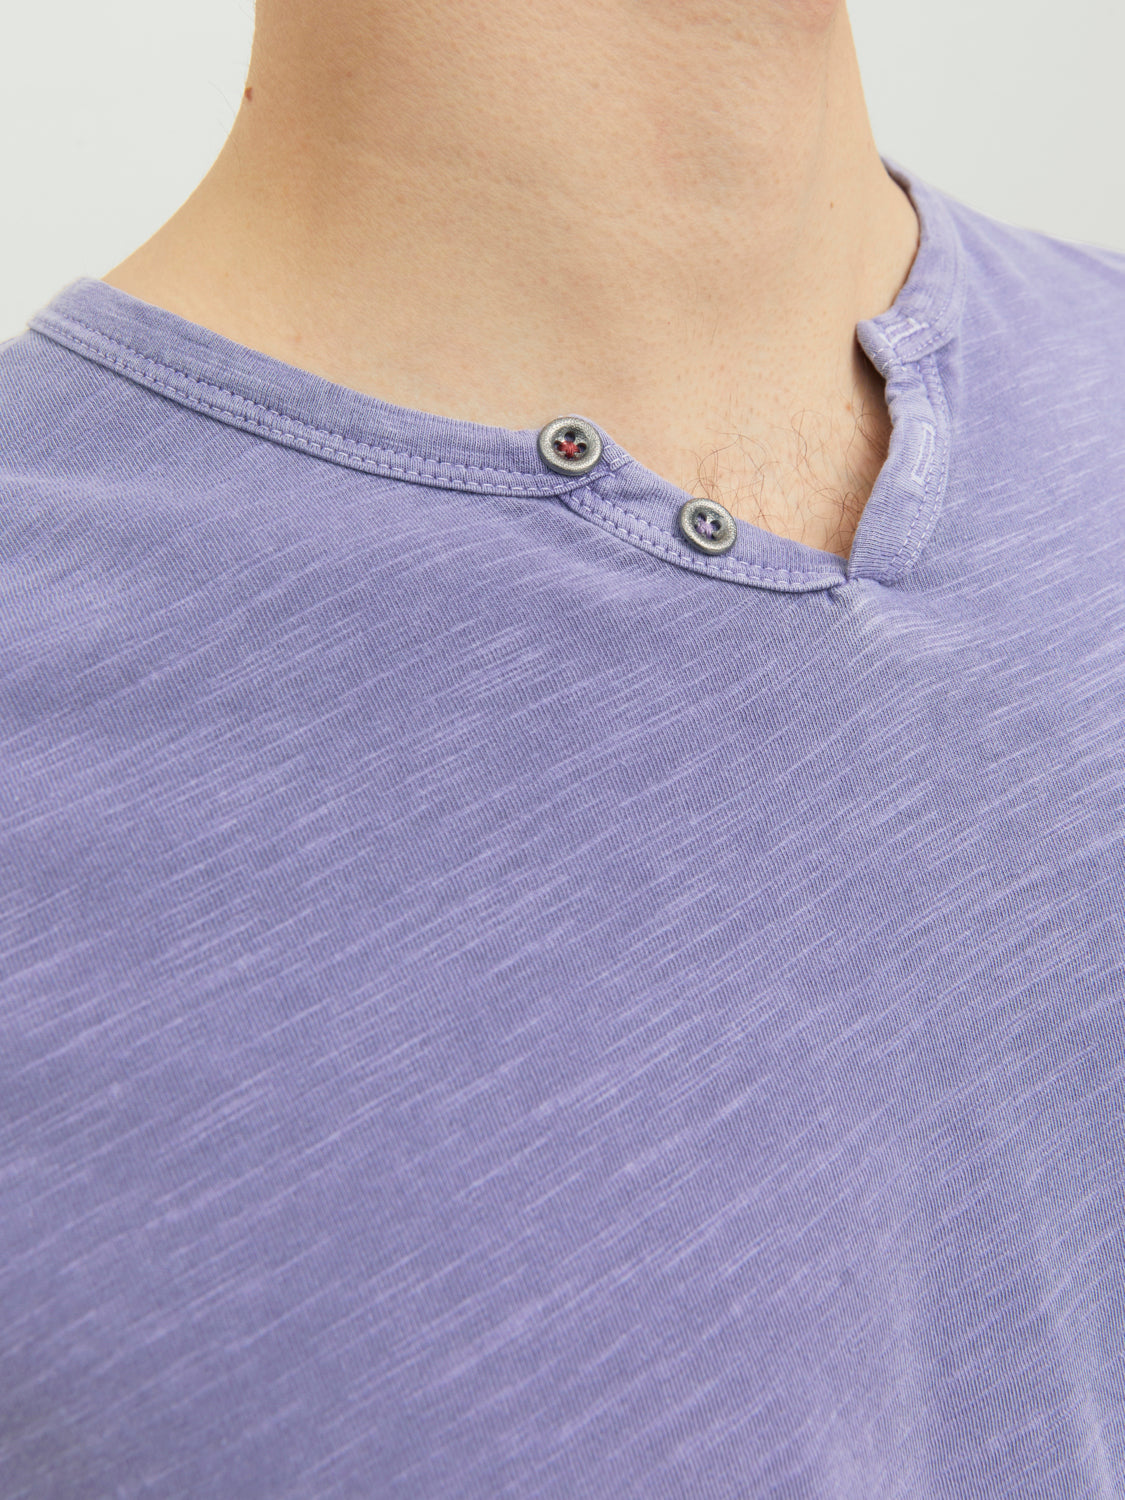 Camiseta morada básica cuello pico con botones - JJESPLIT